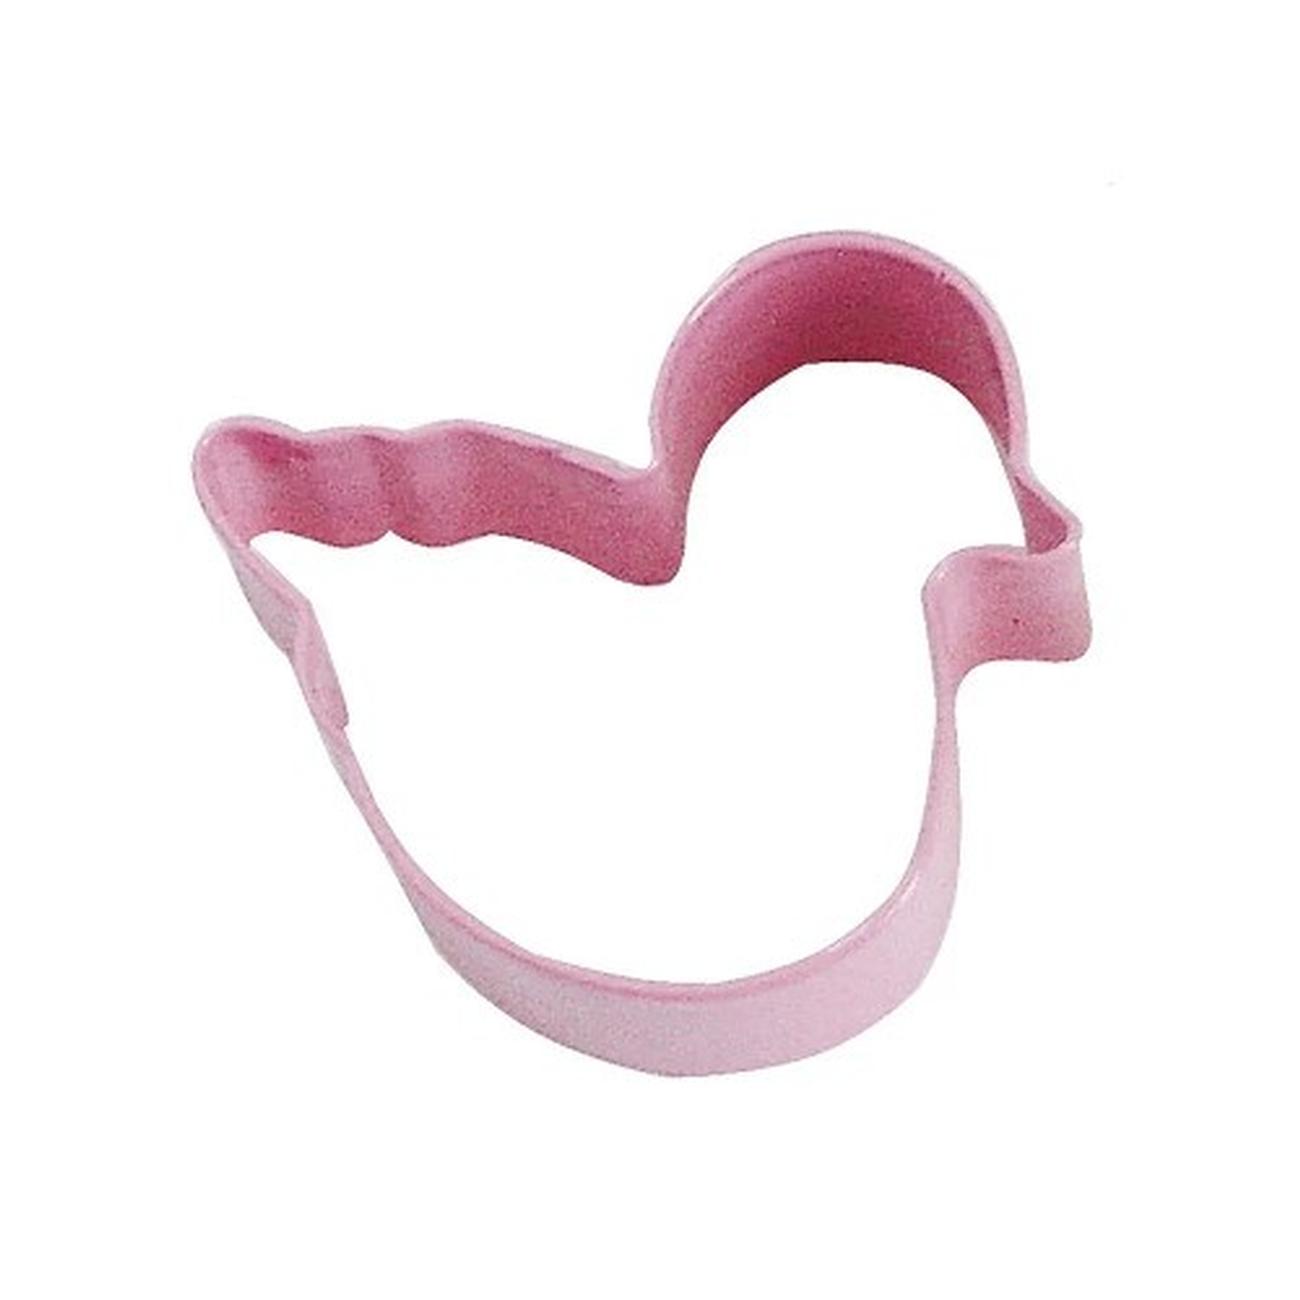 eddingtons-pink-ducking-biscuit-cookie-cutter-animals - Eddingtons Pink Duckling Cookie Cutter